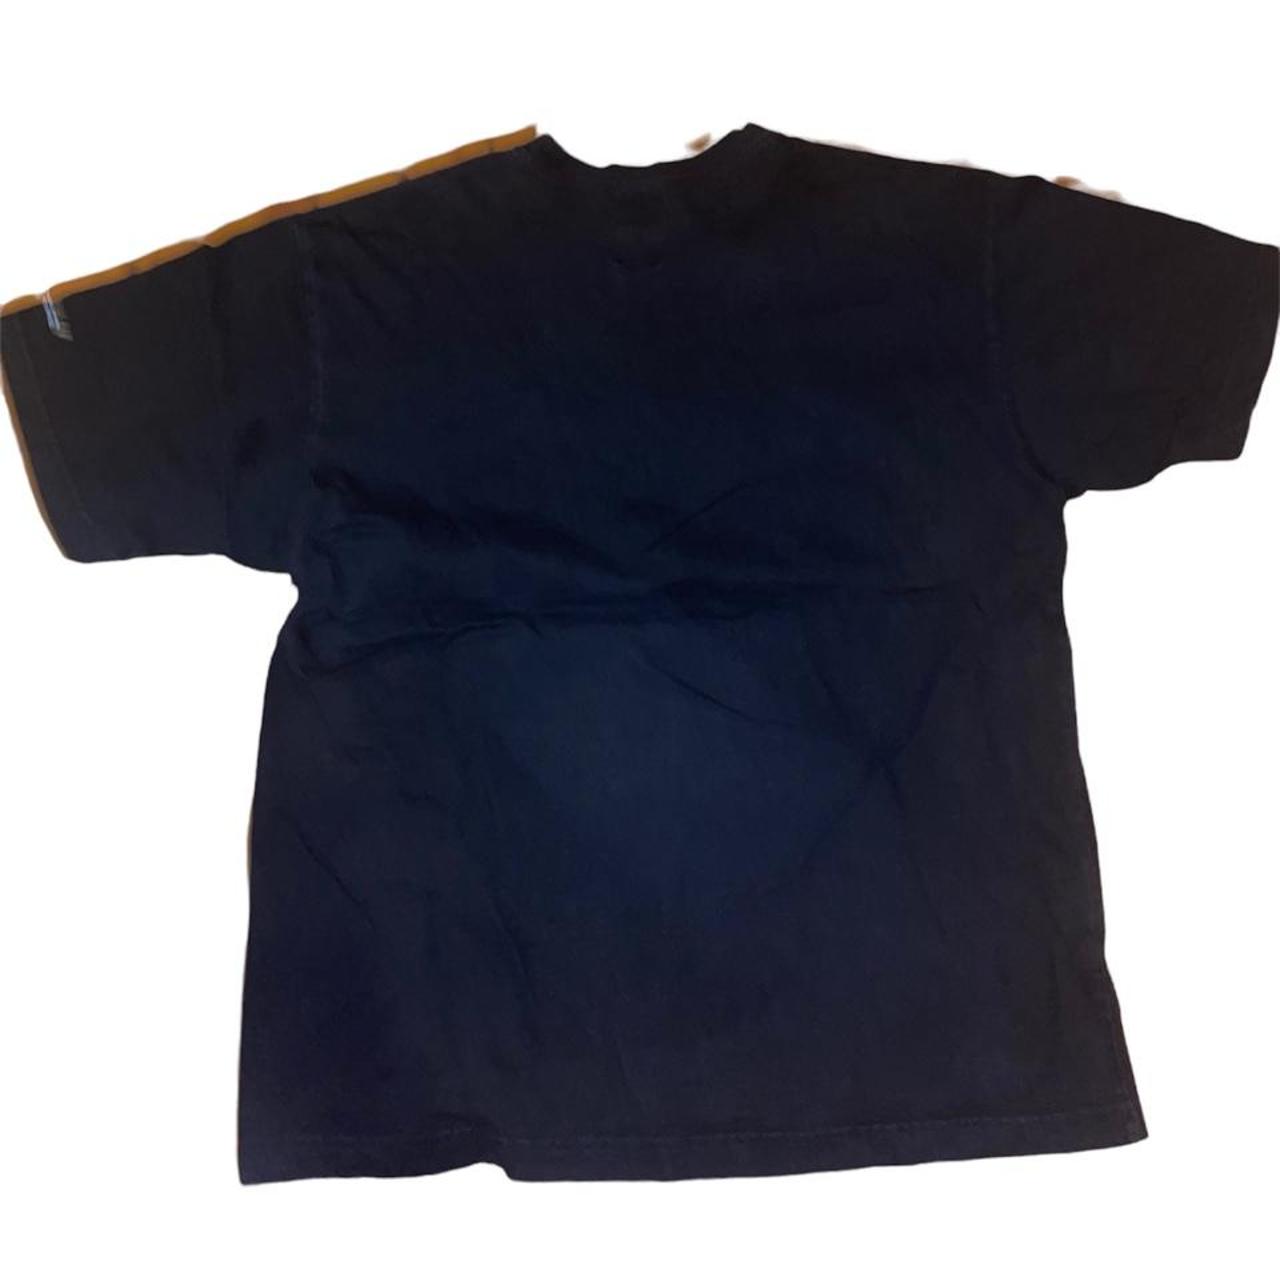 Neighborhood Men's Black T-shirt (2)